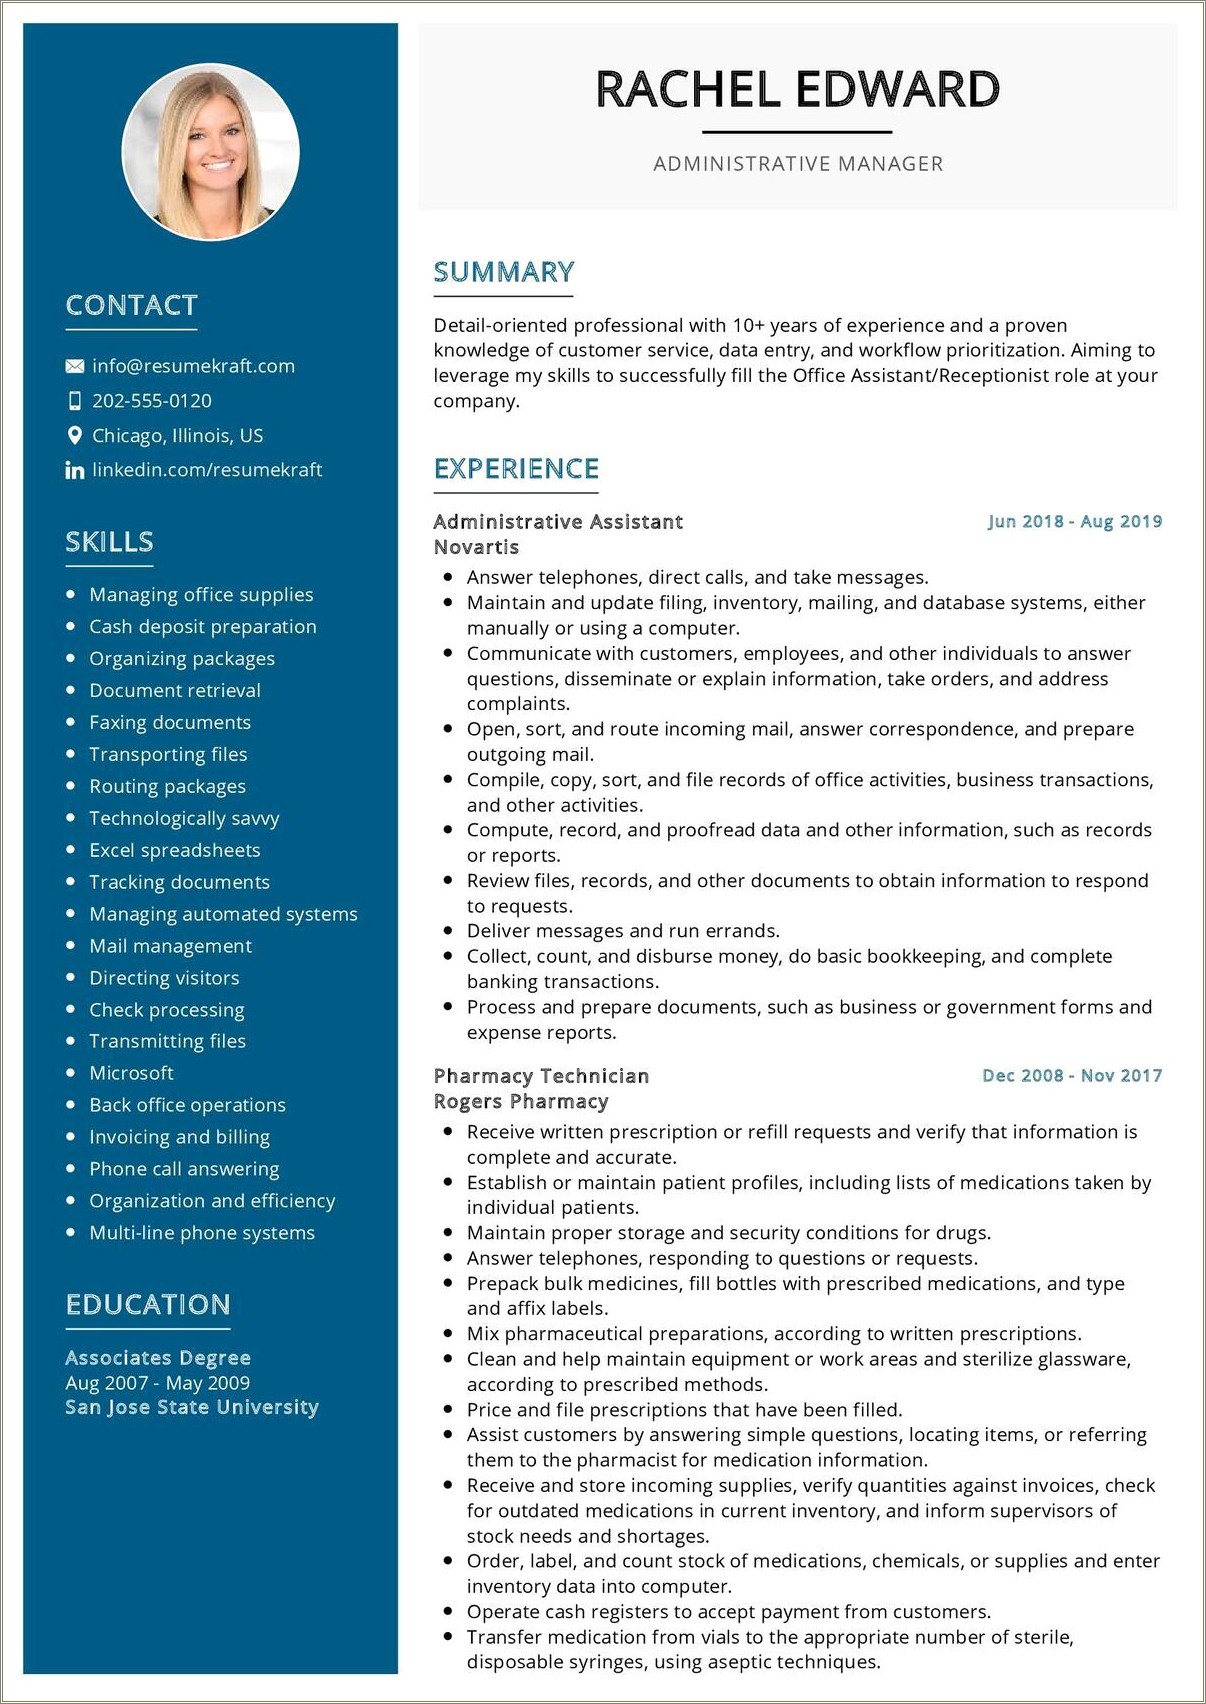 Customer Service Administration Manager Job Description For Resume